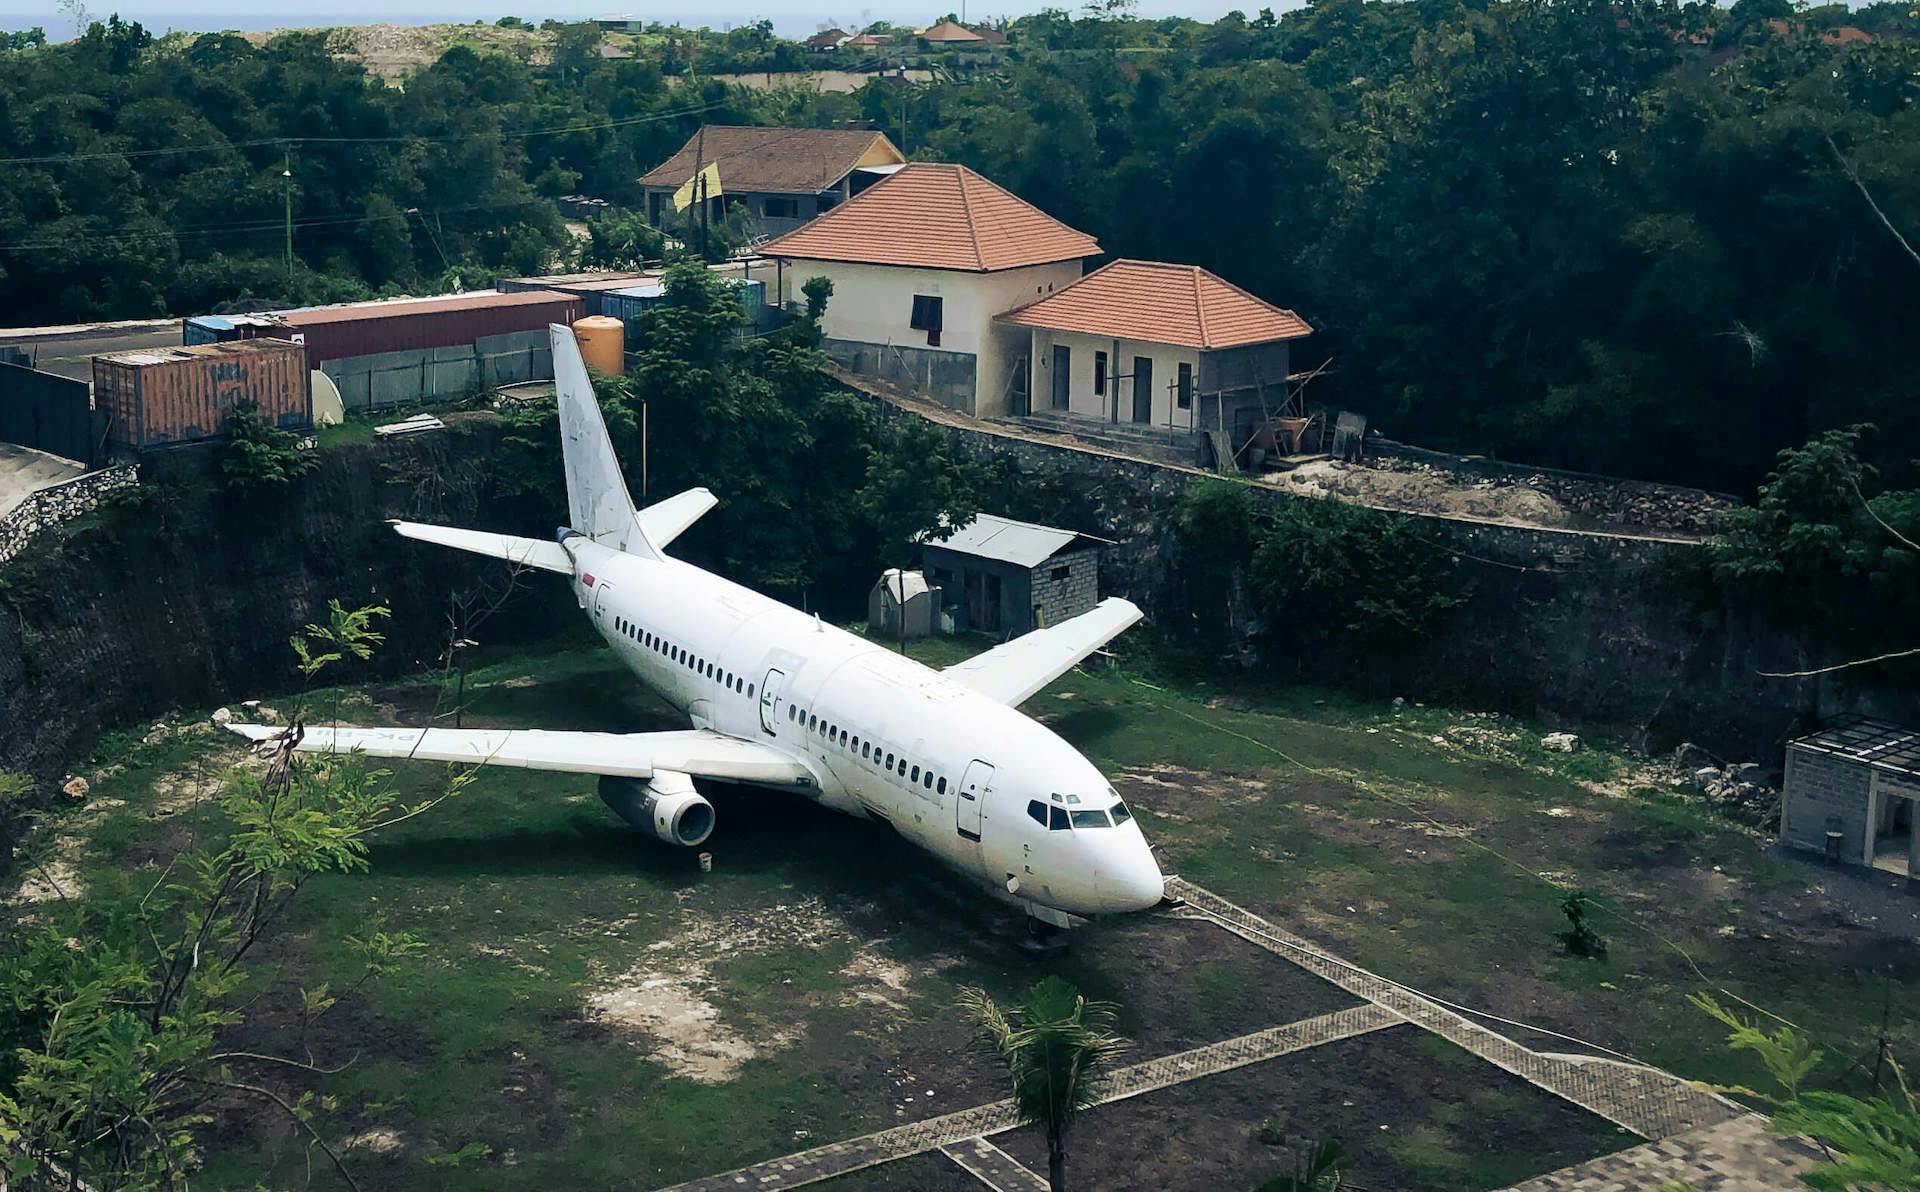 Abandoned Plane in Bali